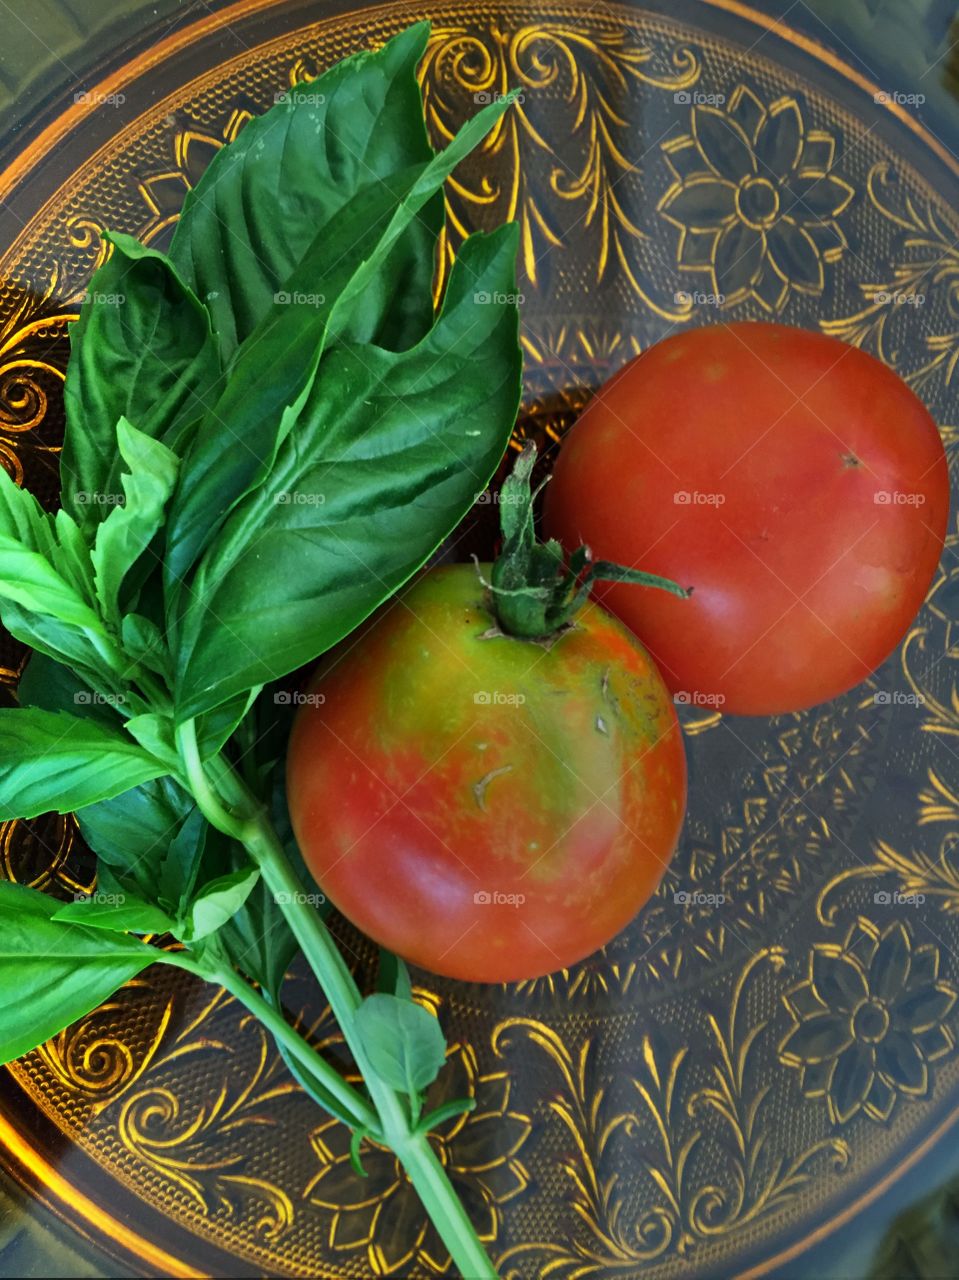 Tomato & Basil homegrown 